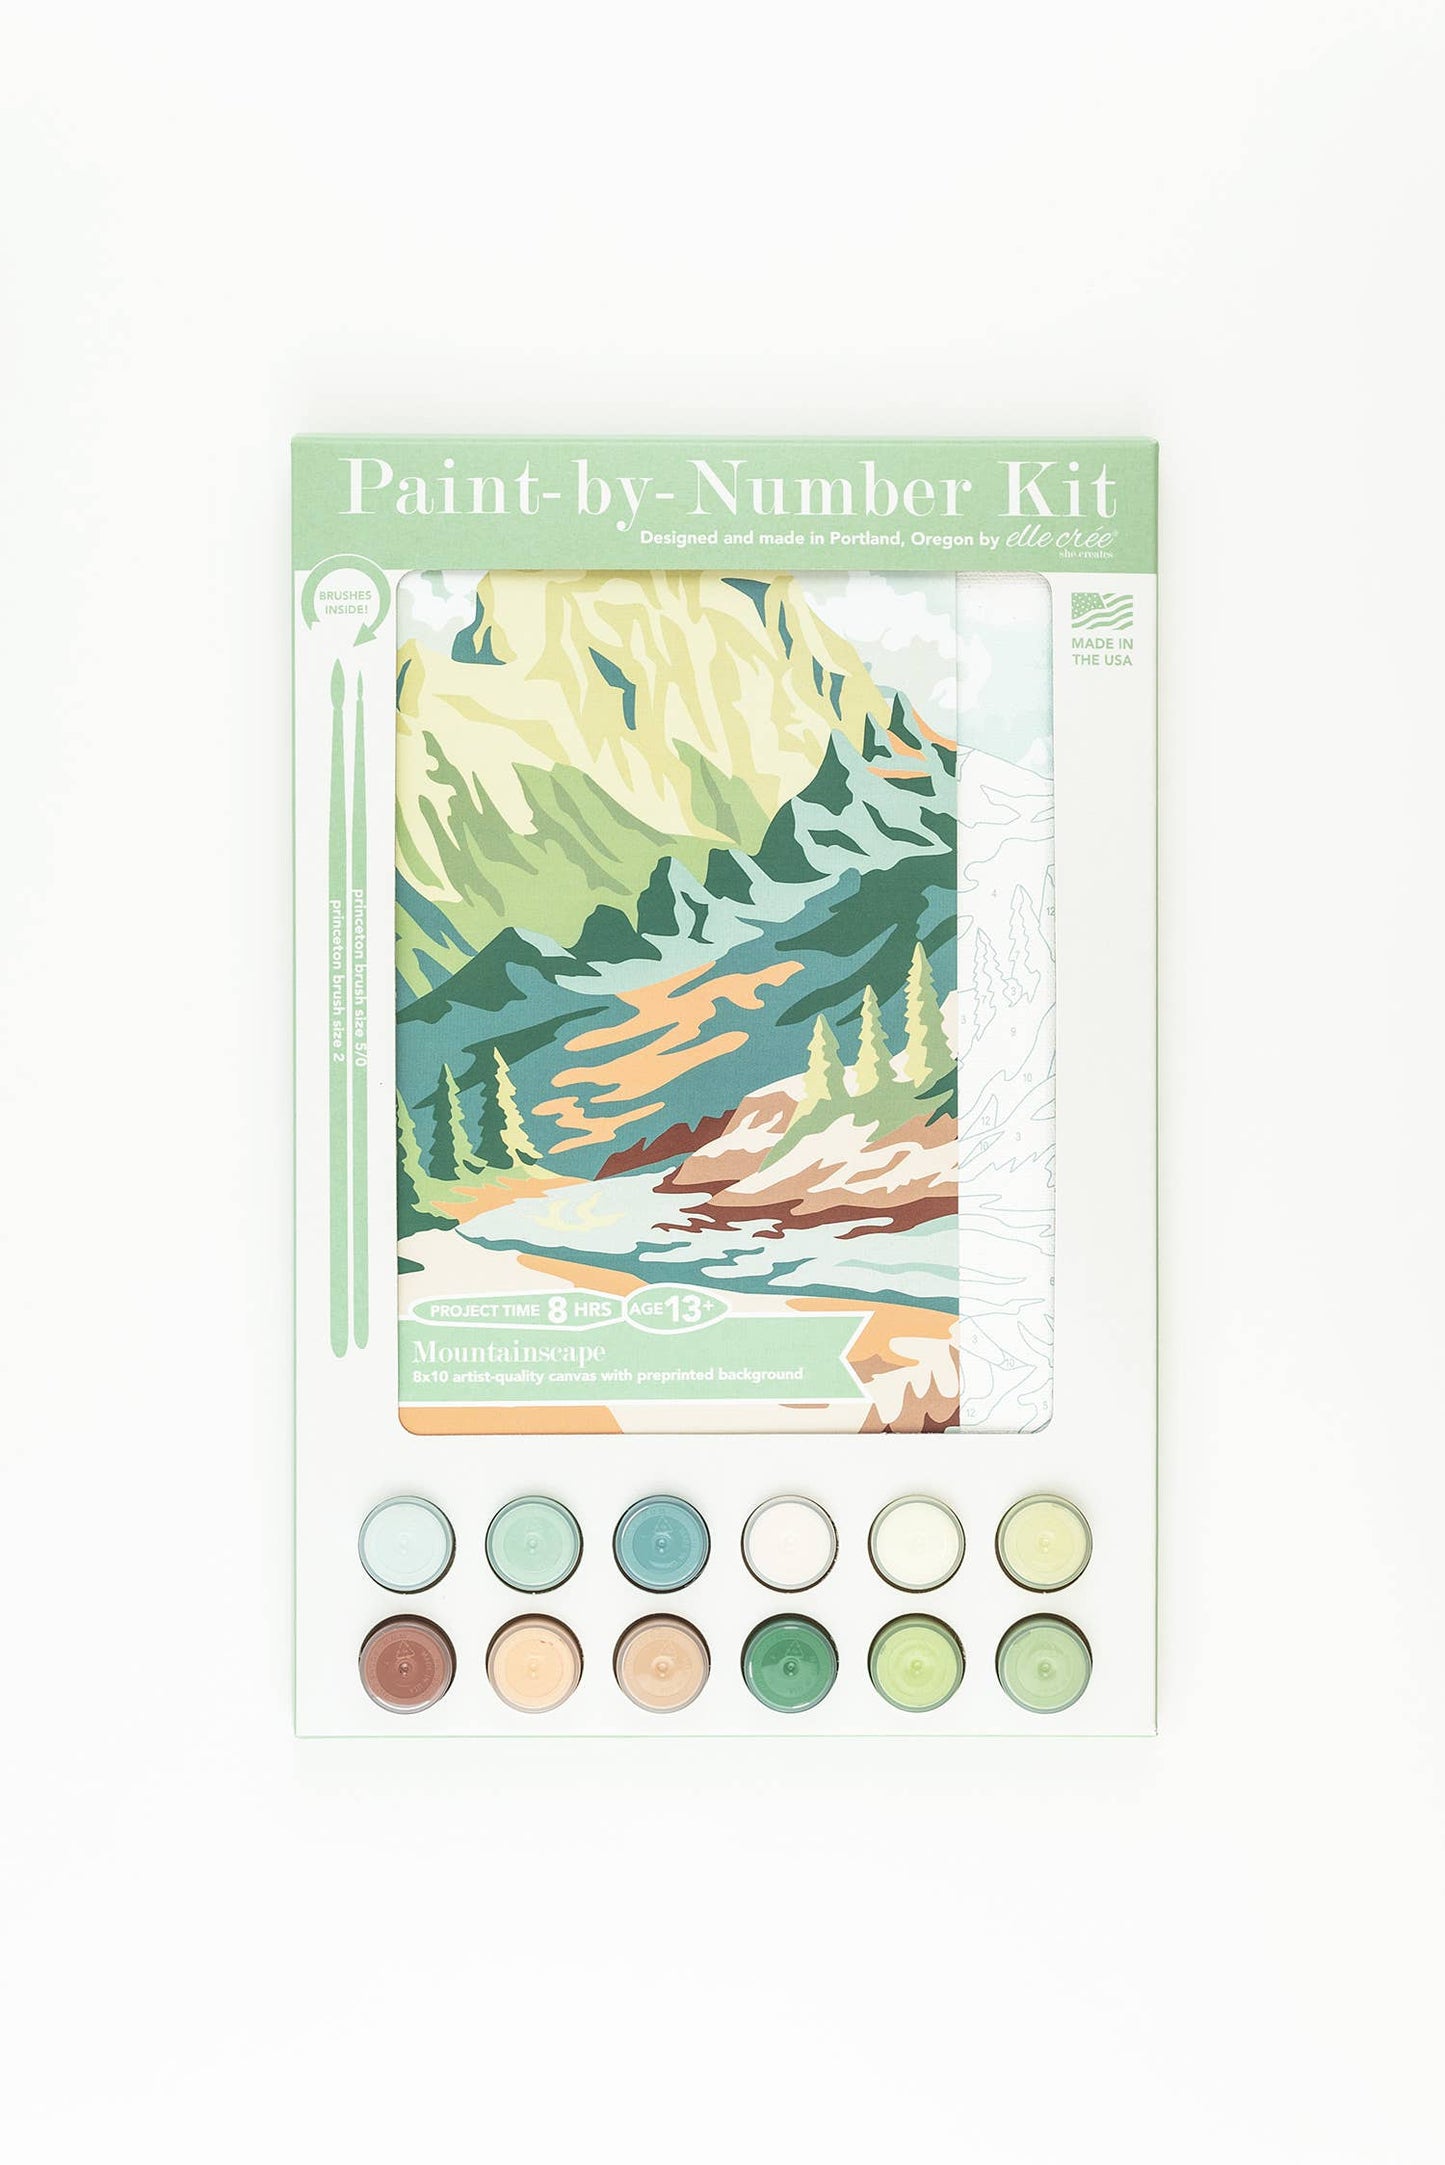 Elle Crée (She Creates) - Mountainscape Paint-by-Number Kit